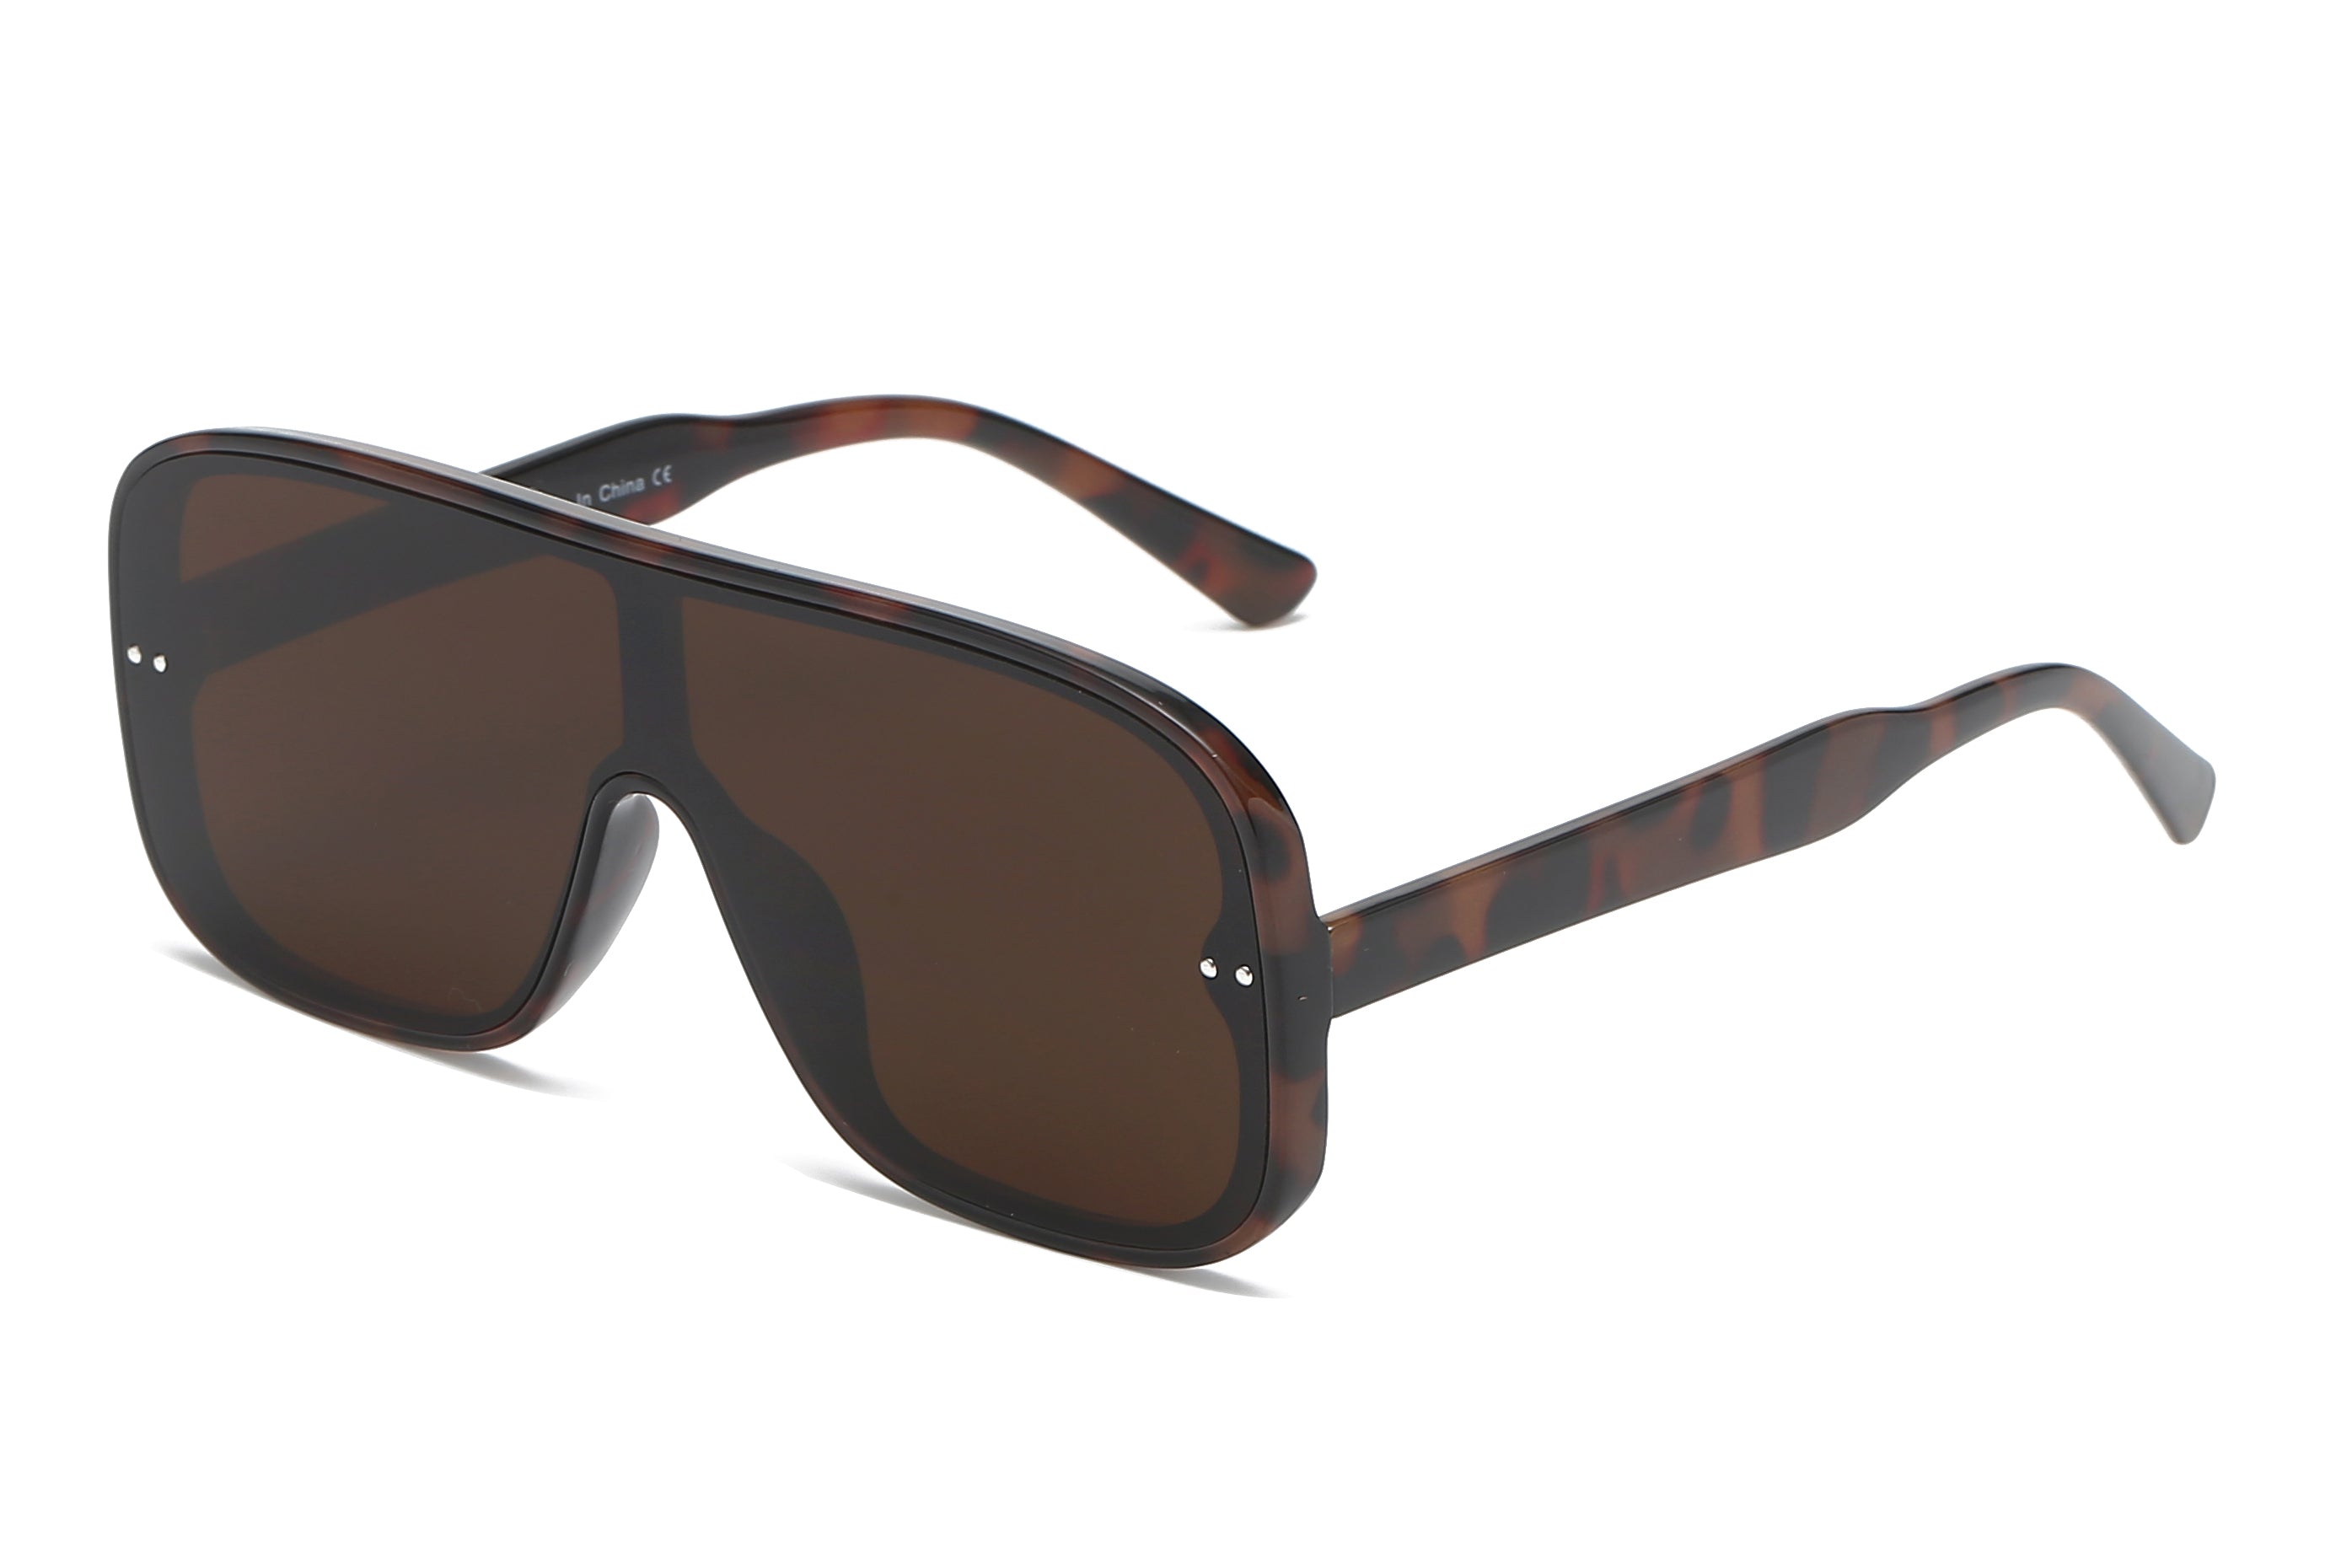 S2027 - Women Flat Top Square Fashion Sunglasses Tortoise